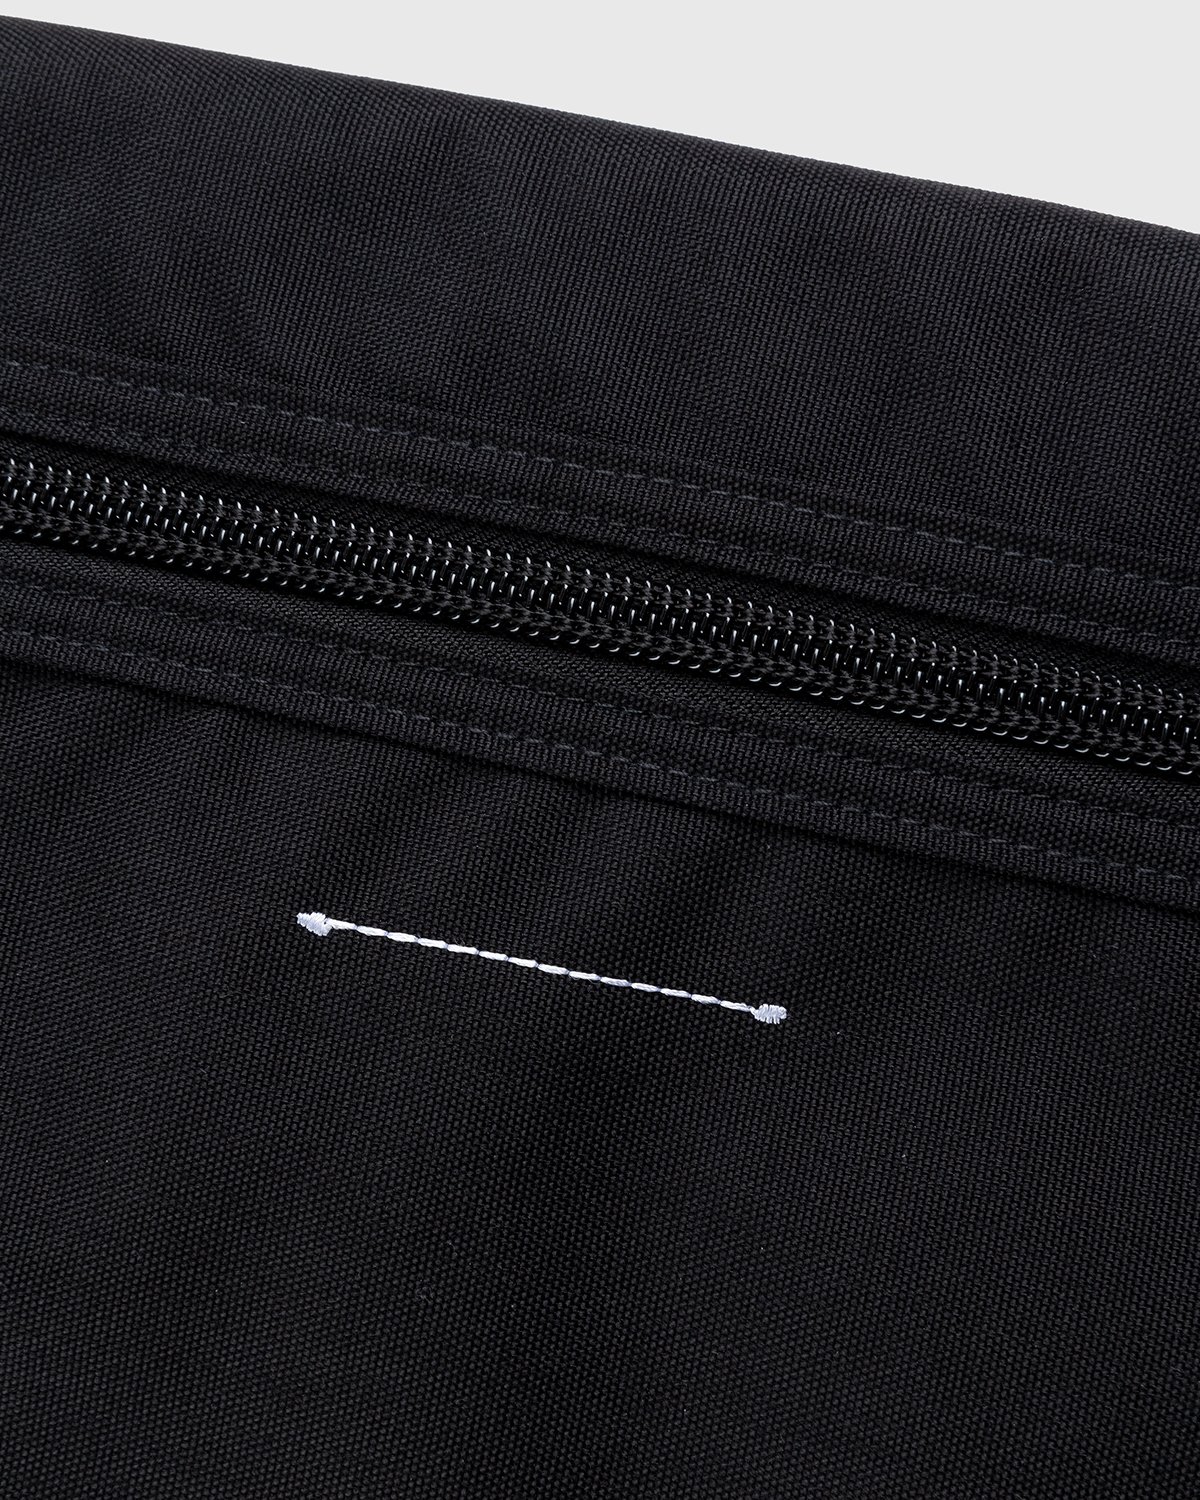 MM6 Maison Margiela x Eastpak - Borsa Tracolla Shoulder Bag Black - Accessories - Black - Image 7